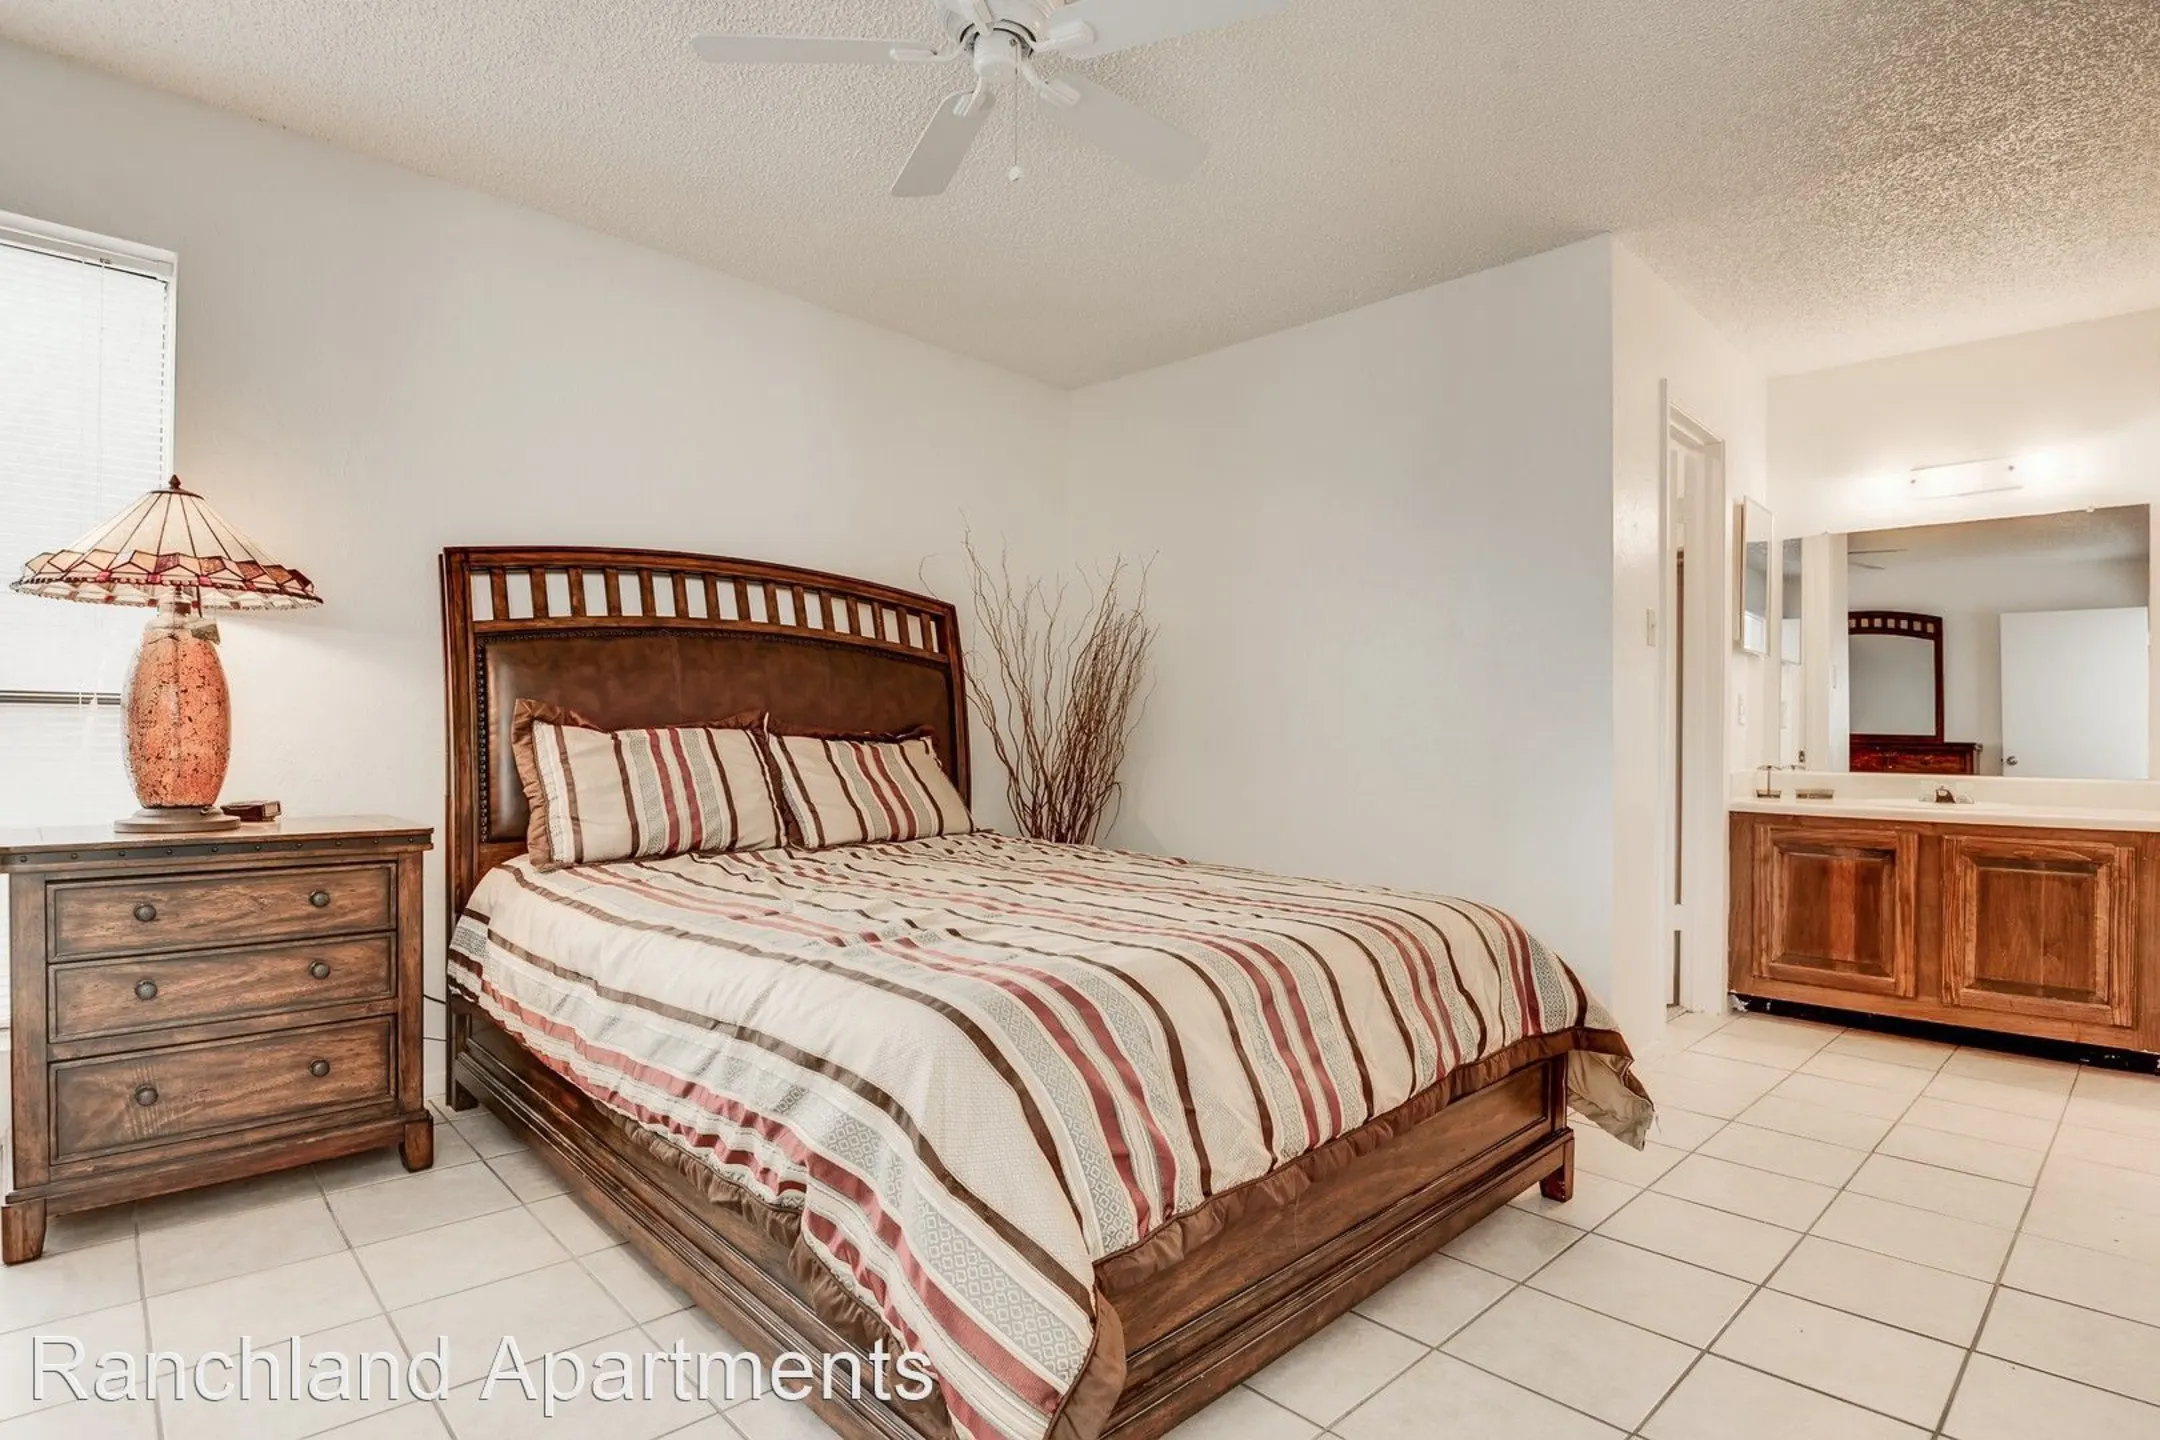 Bedroom - Ranchland Apartments - Midland, TX